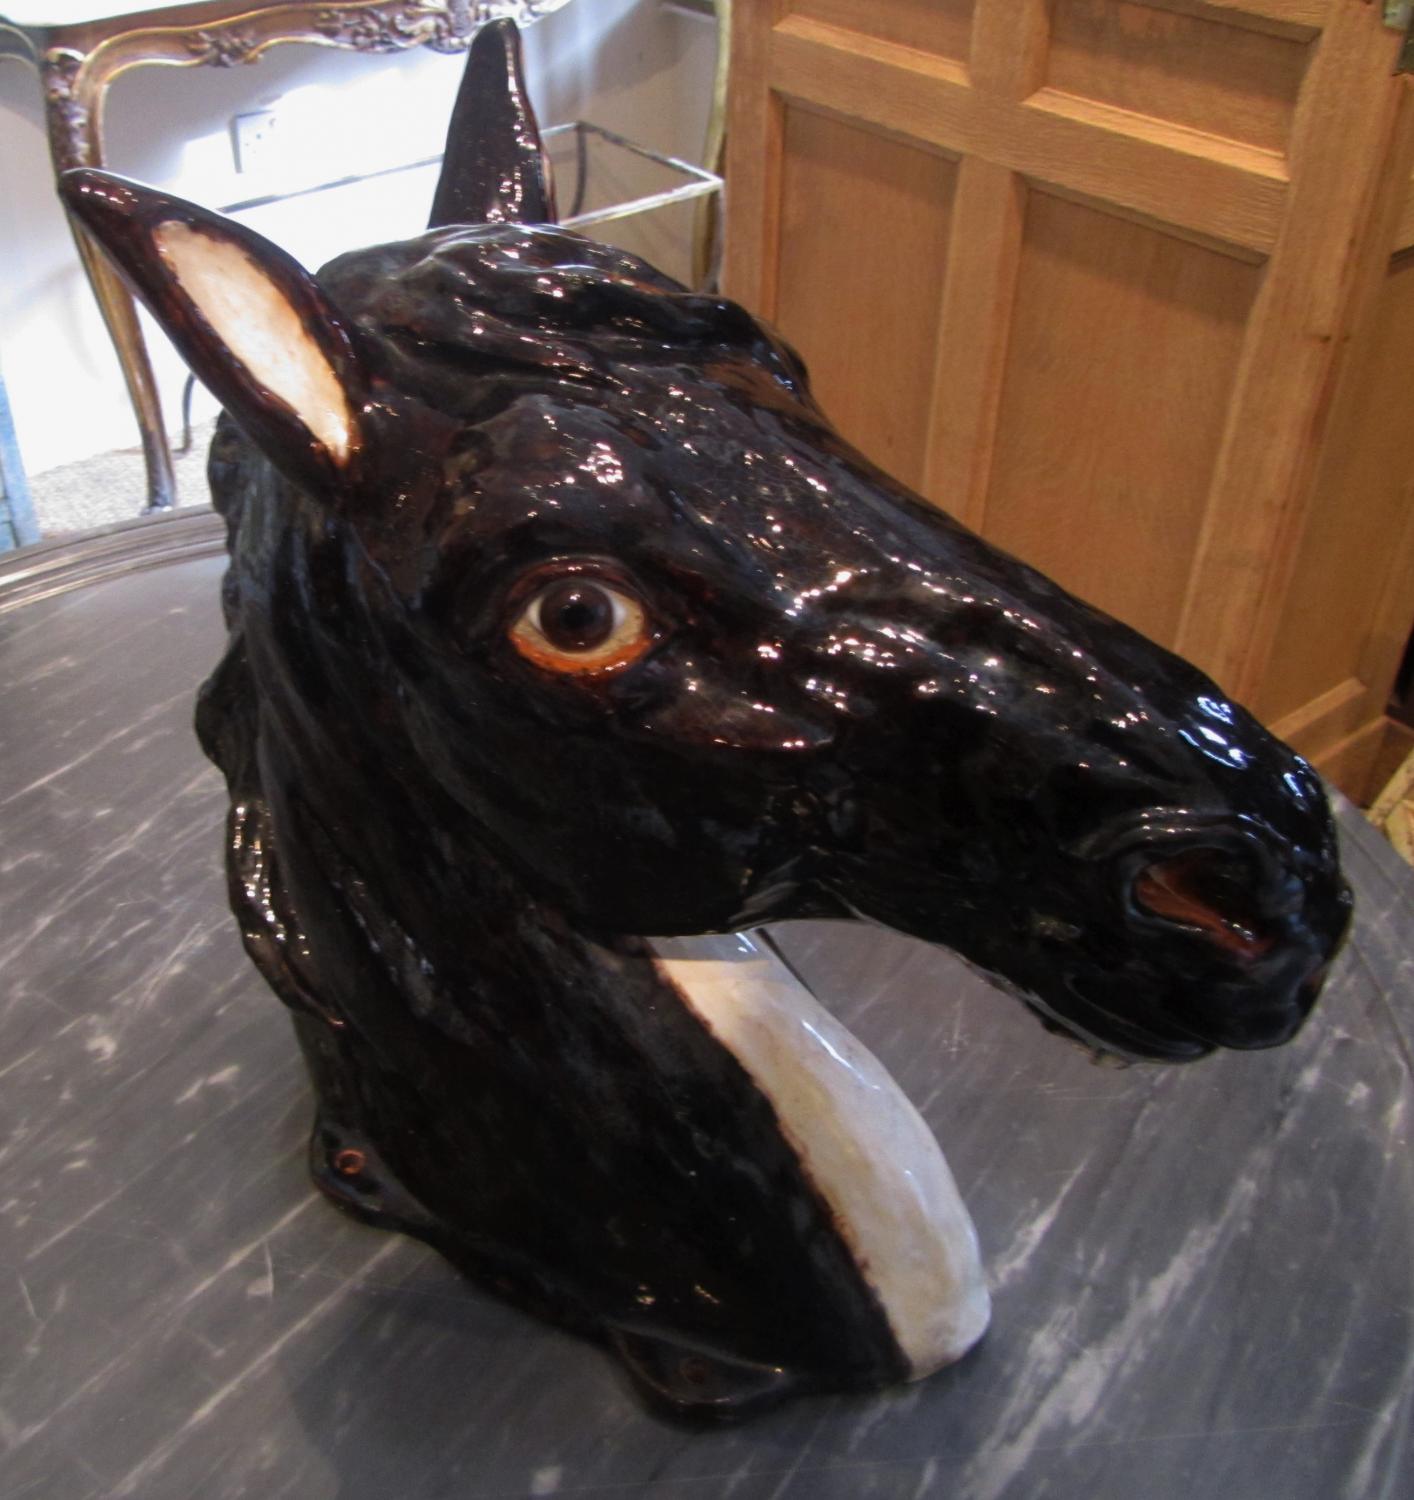 A glazed terracotta horses head